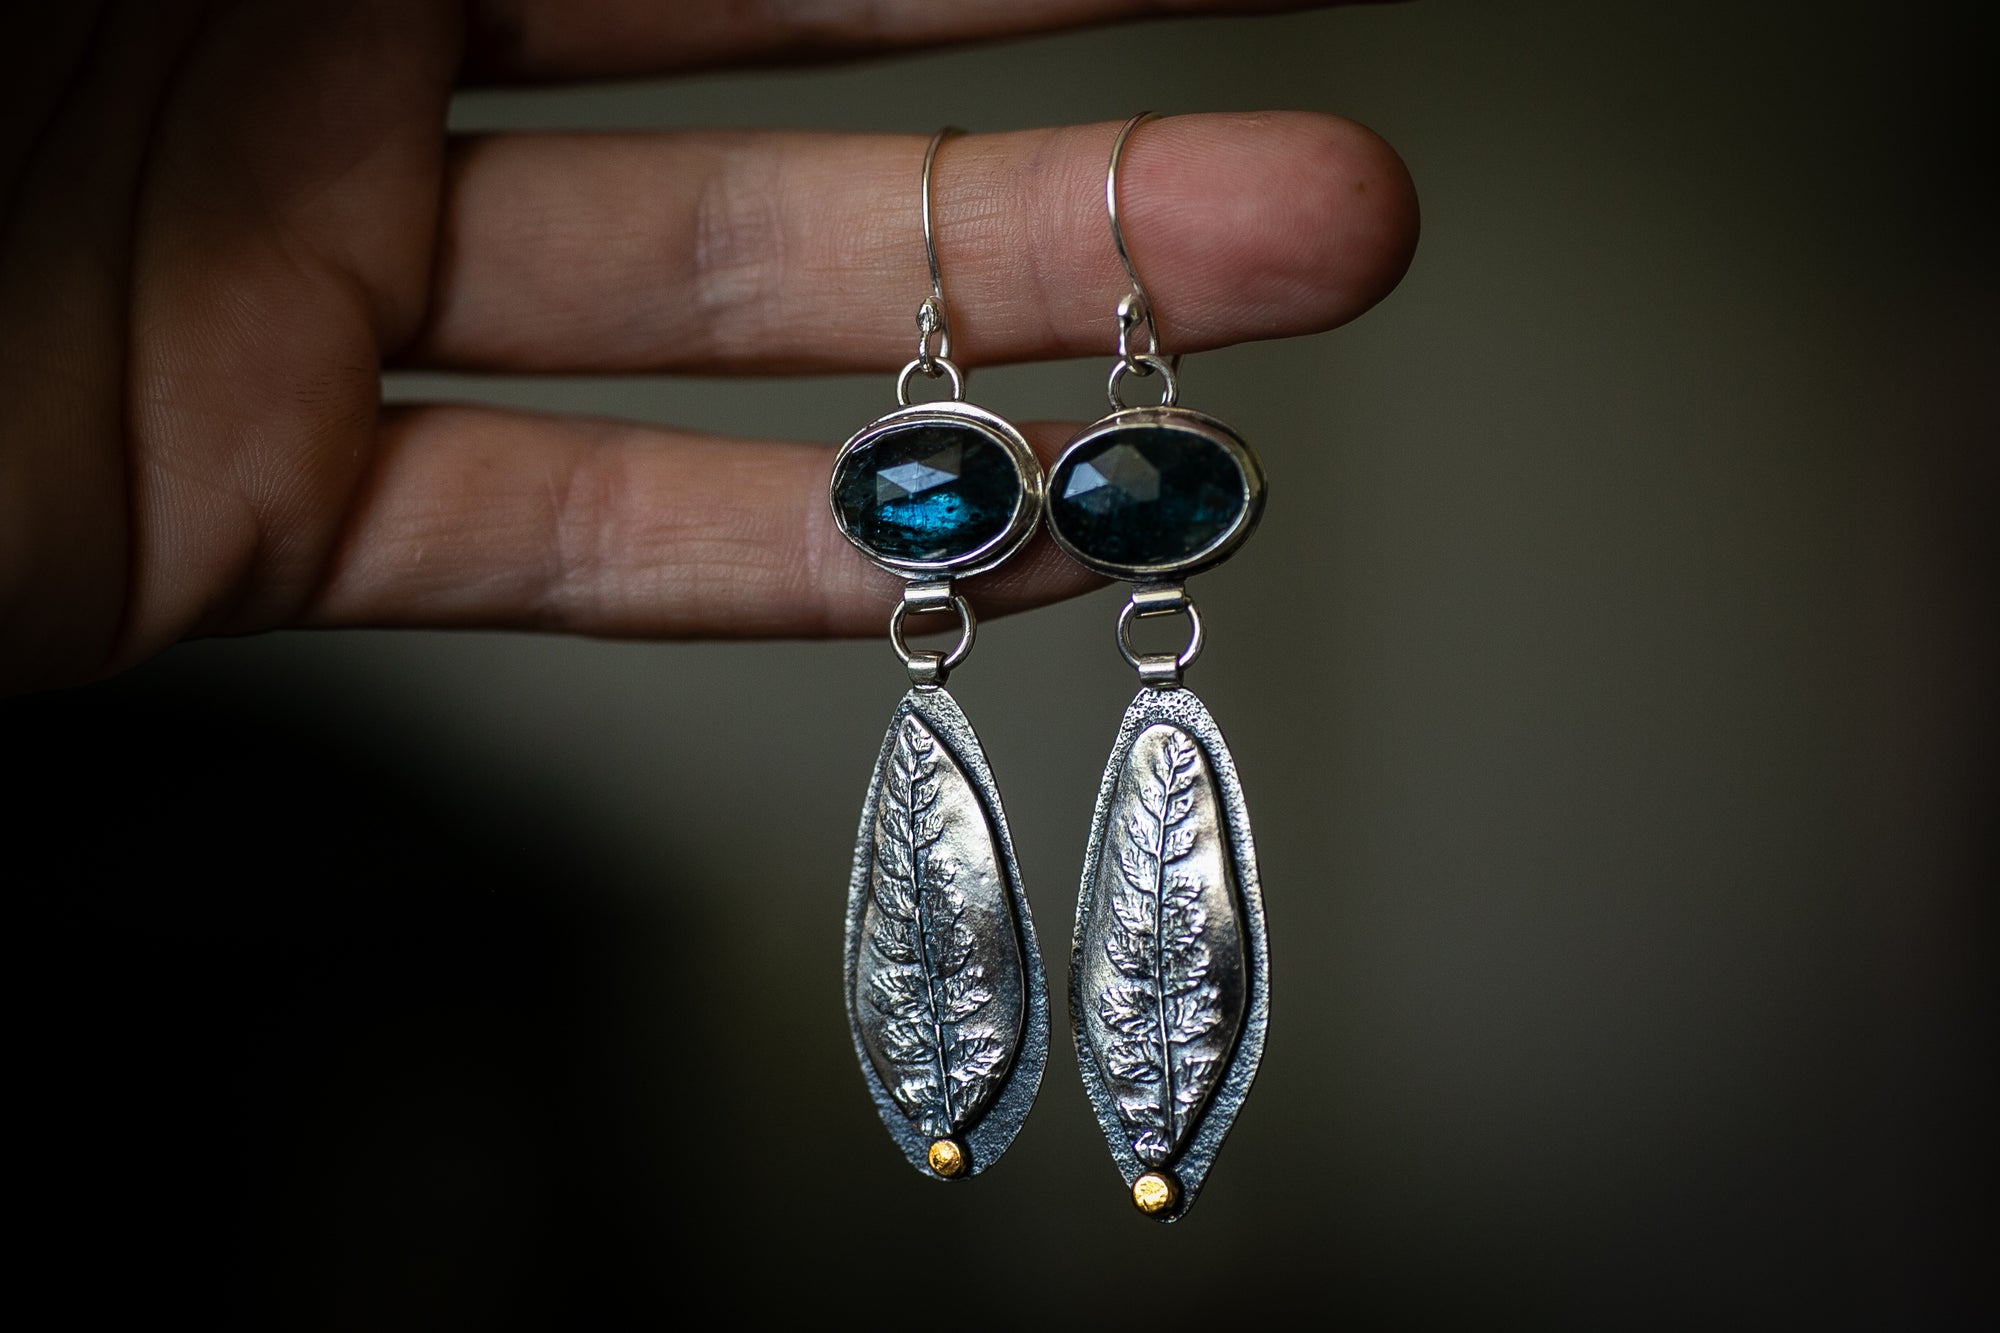 Fern & teal Kyanite earrings ~ For Magic, Protection & Healing